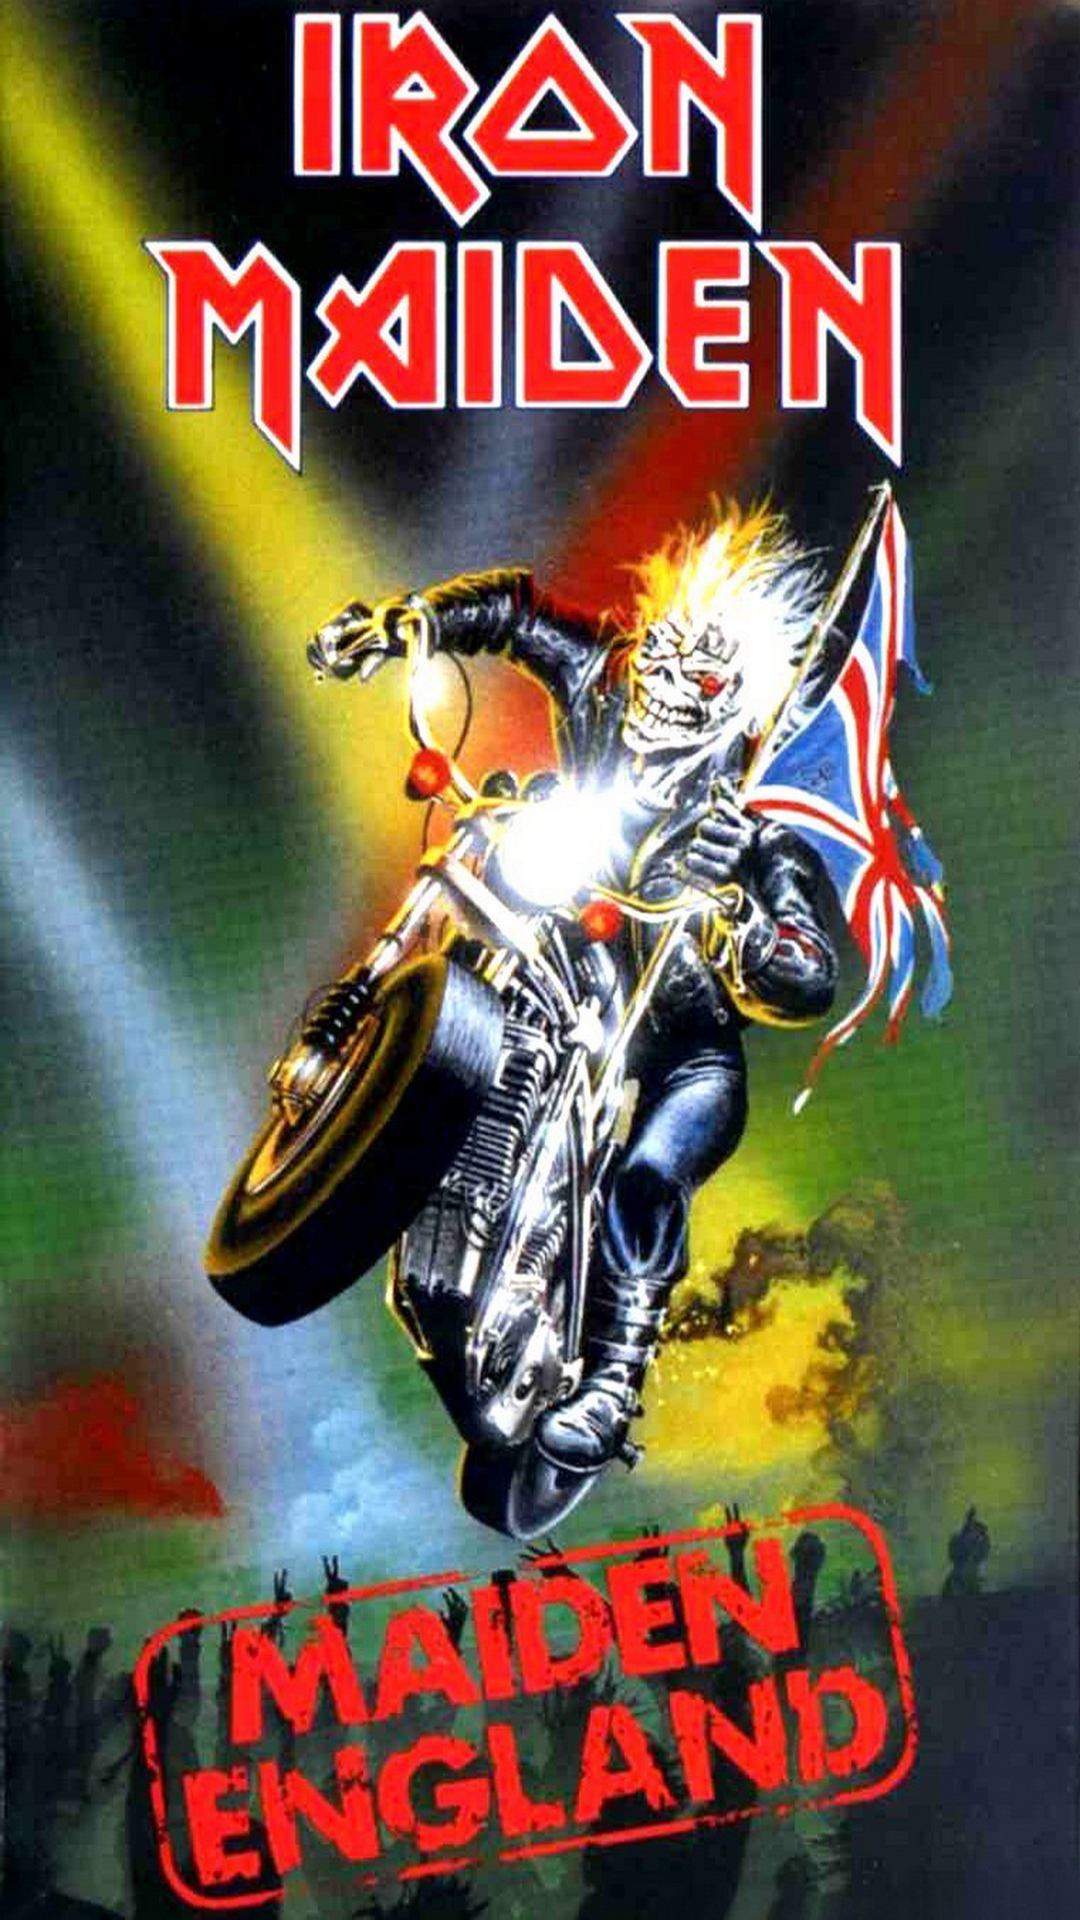 Iron Maiden iPhone Wallpaper